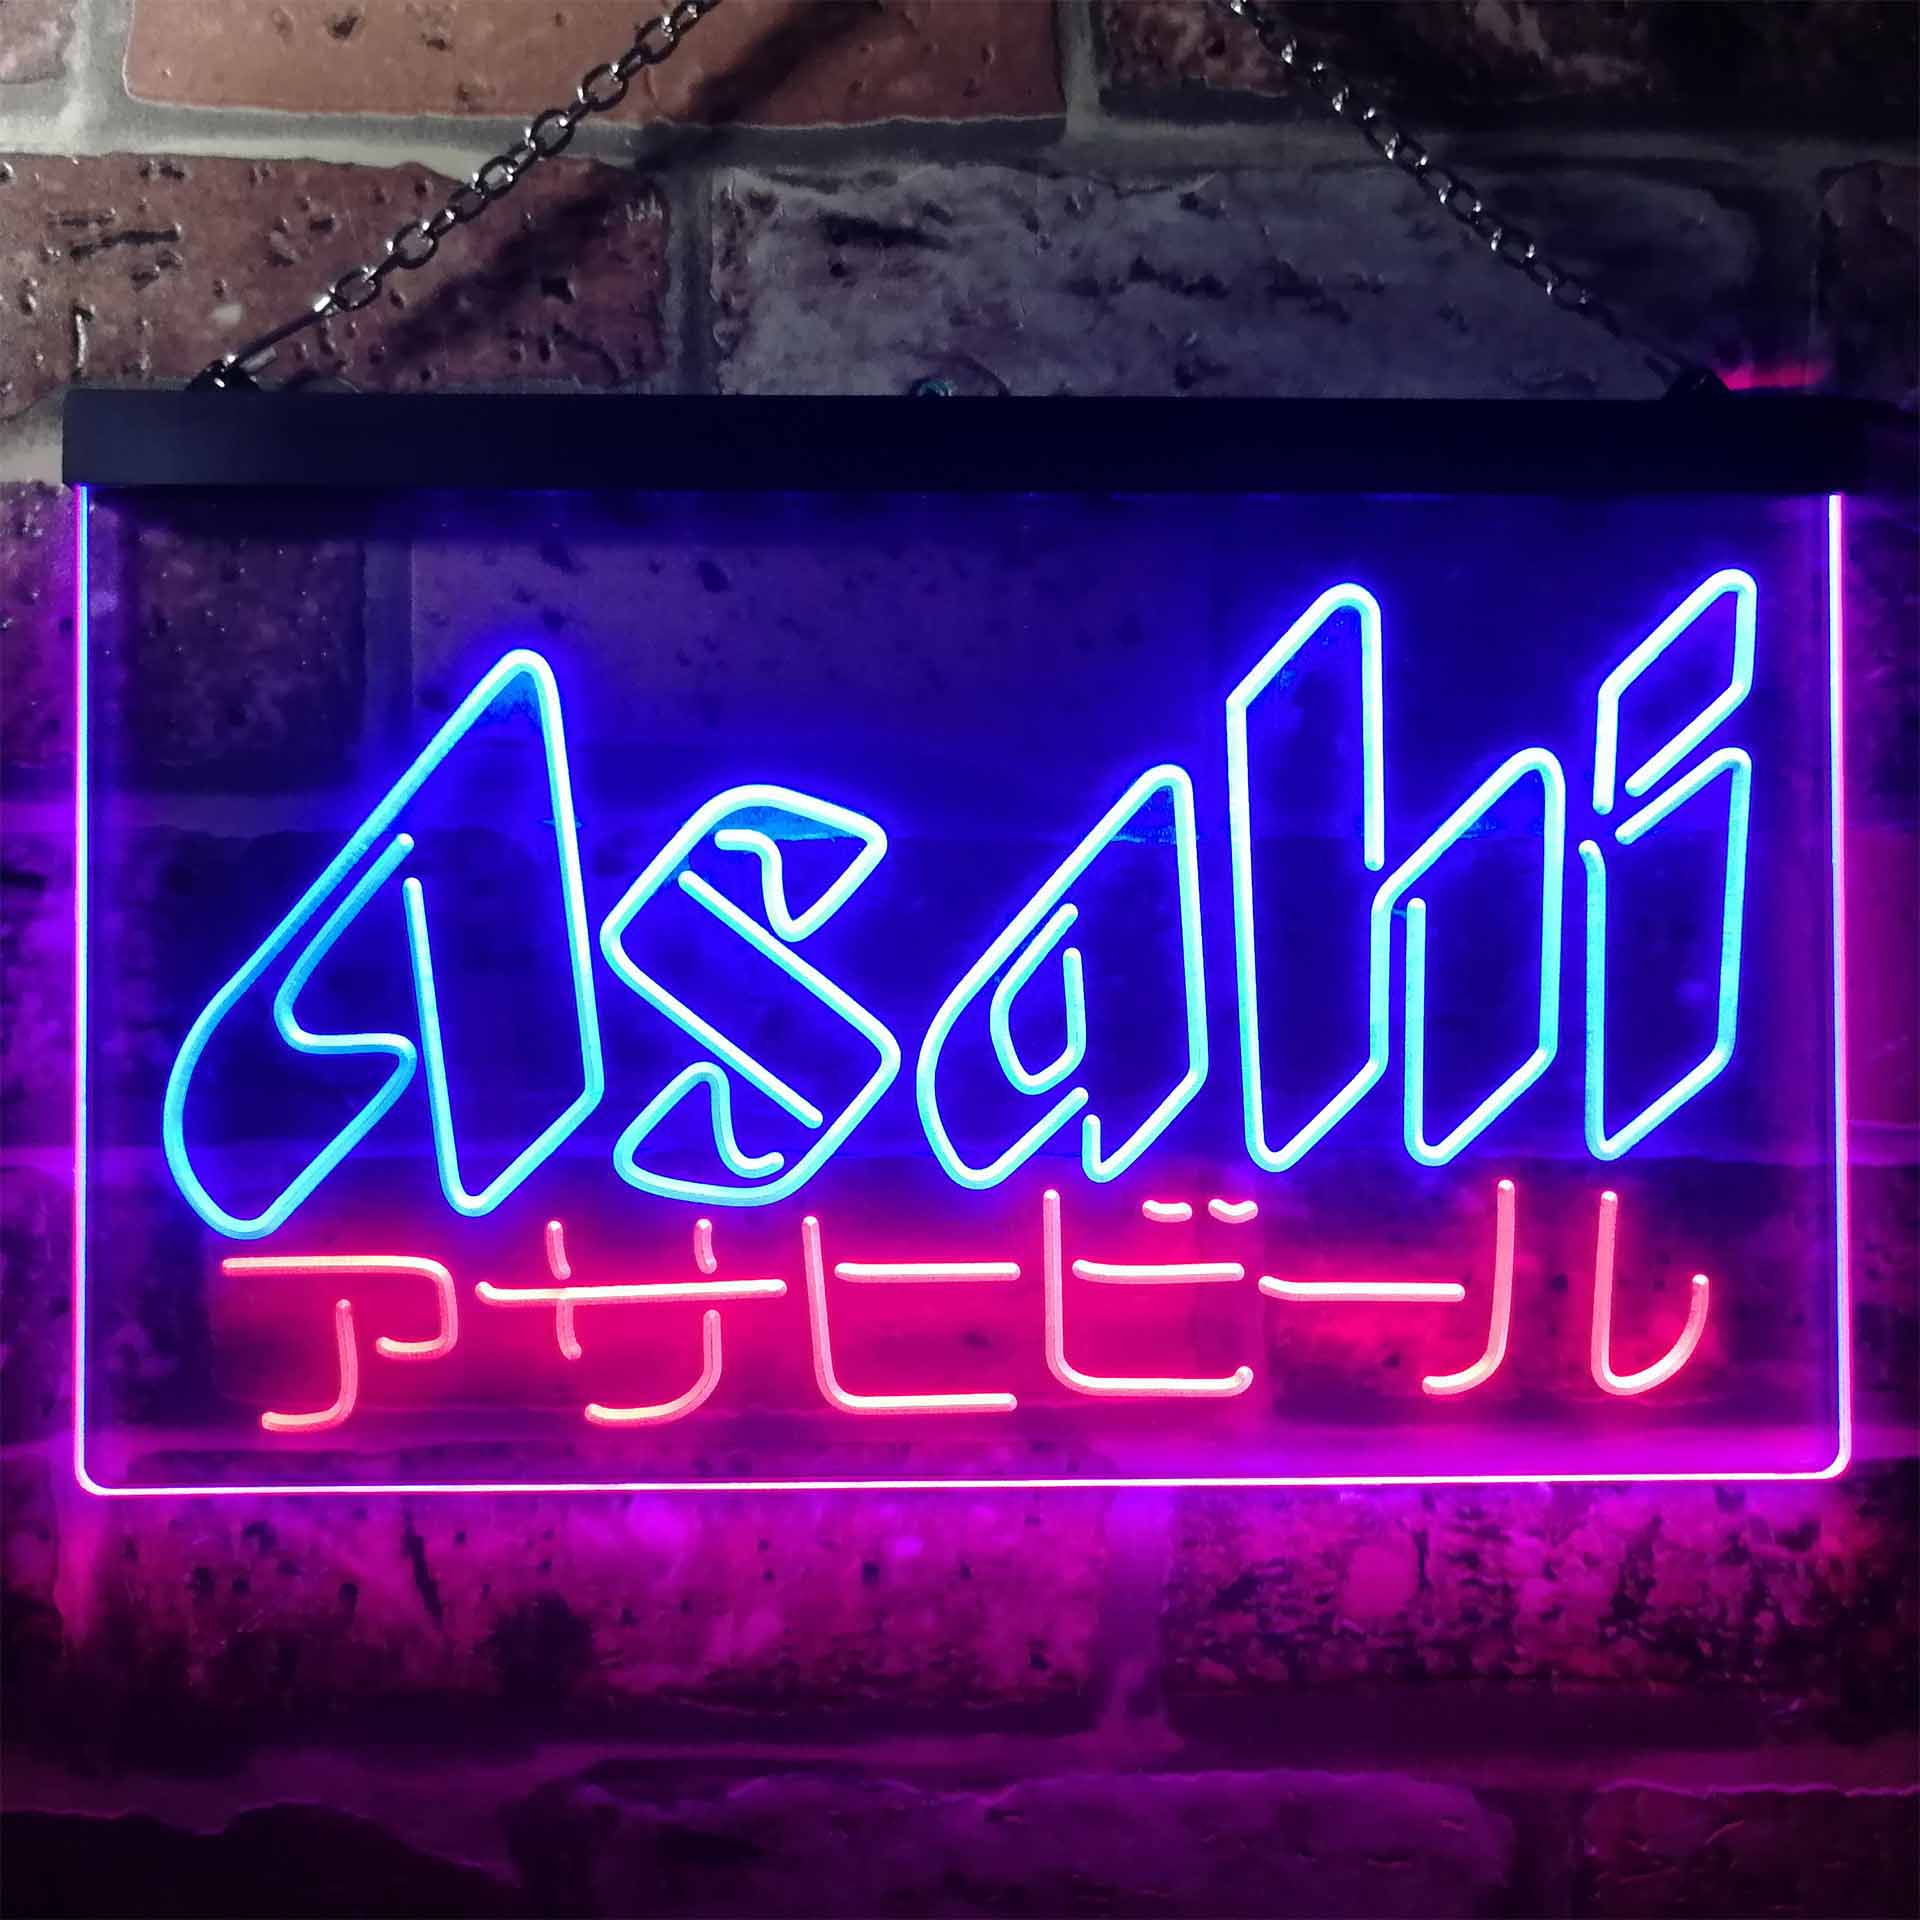 Asahi Japan Beer Bar Neon LED Sign